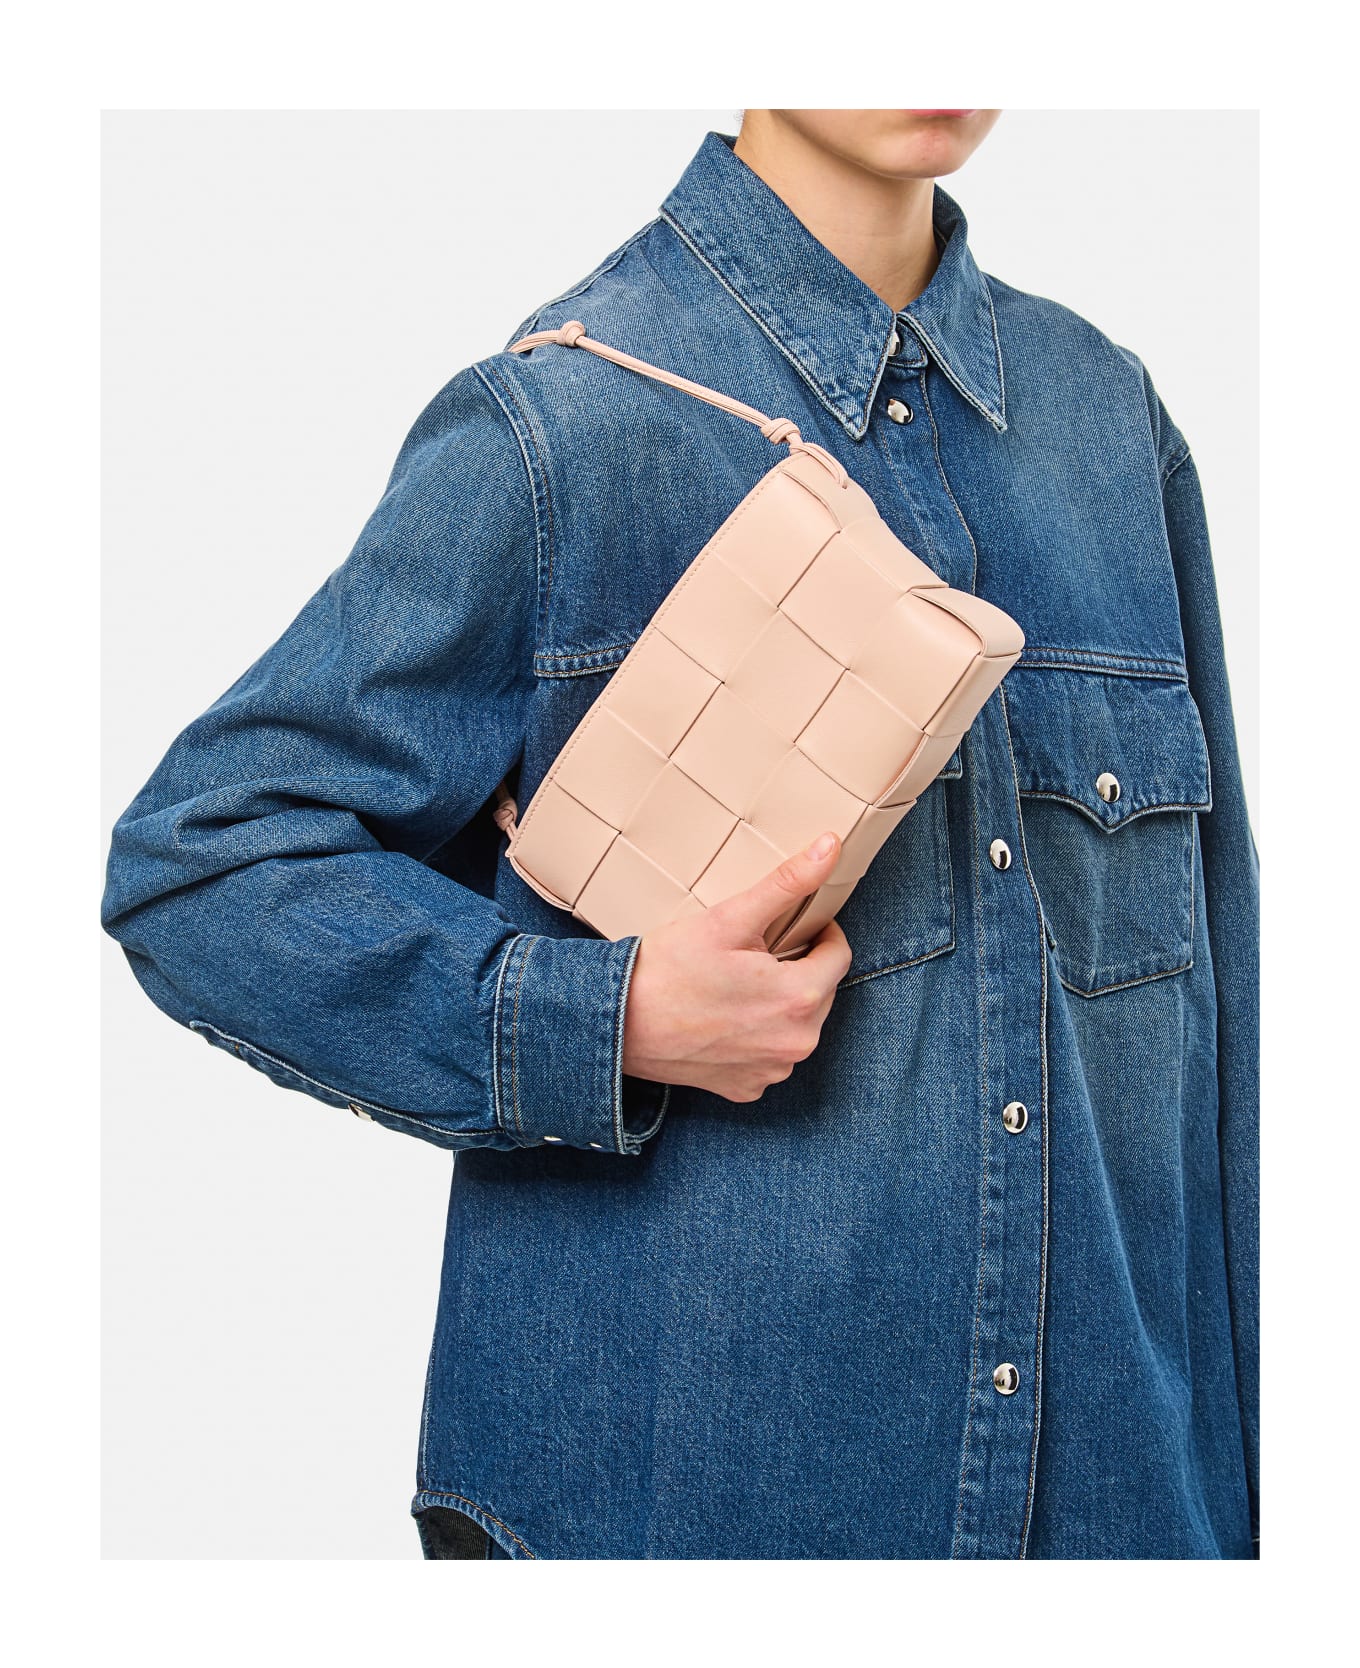 Bottega Veneta Cassette Pouch W/ Strap Leather Shoulder Bag - Pink